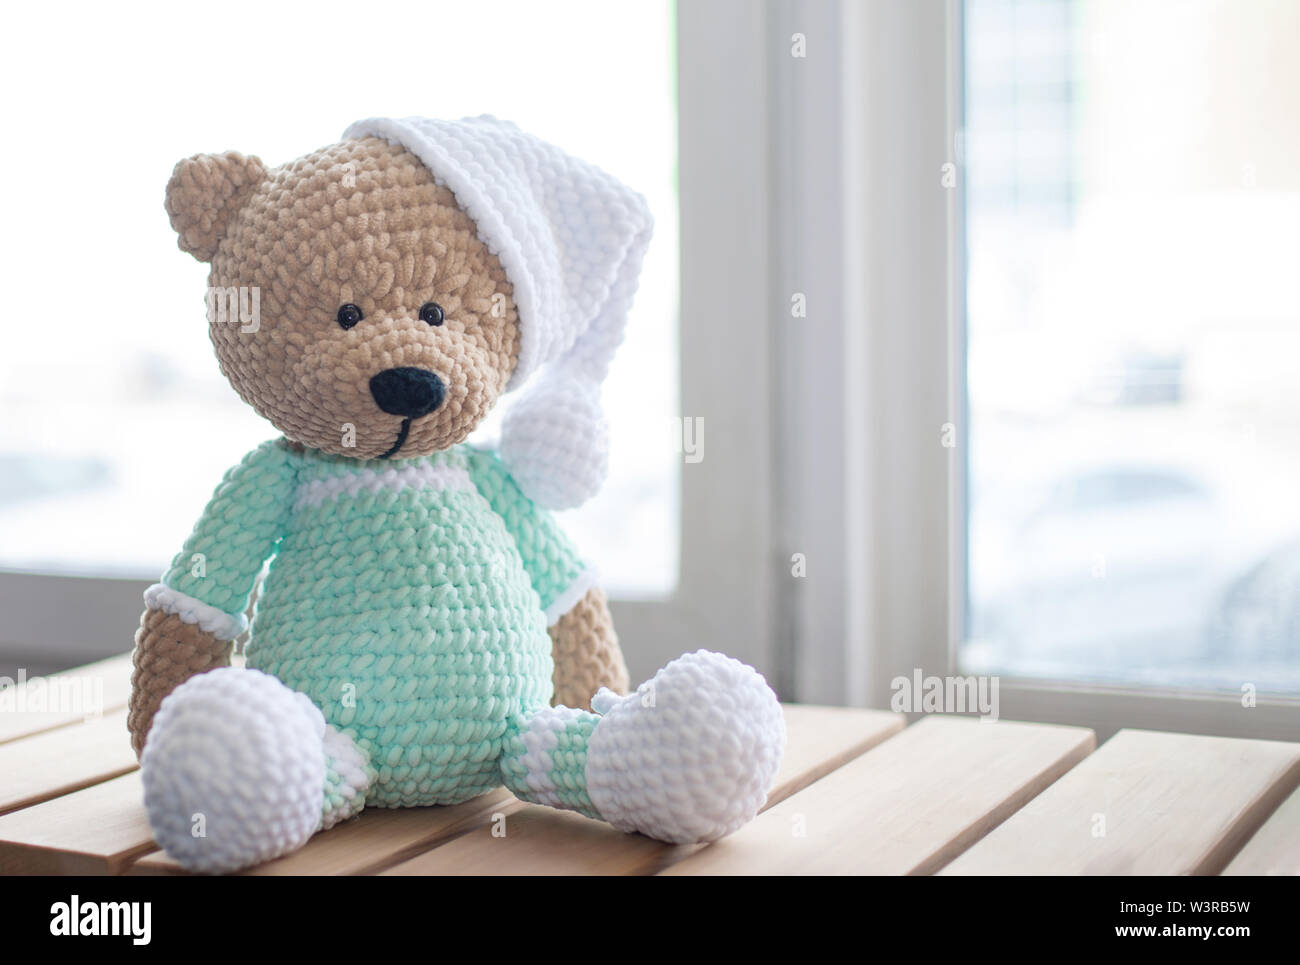 Handmade amigurumi teddy bear on wooden table. Stock Photo